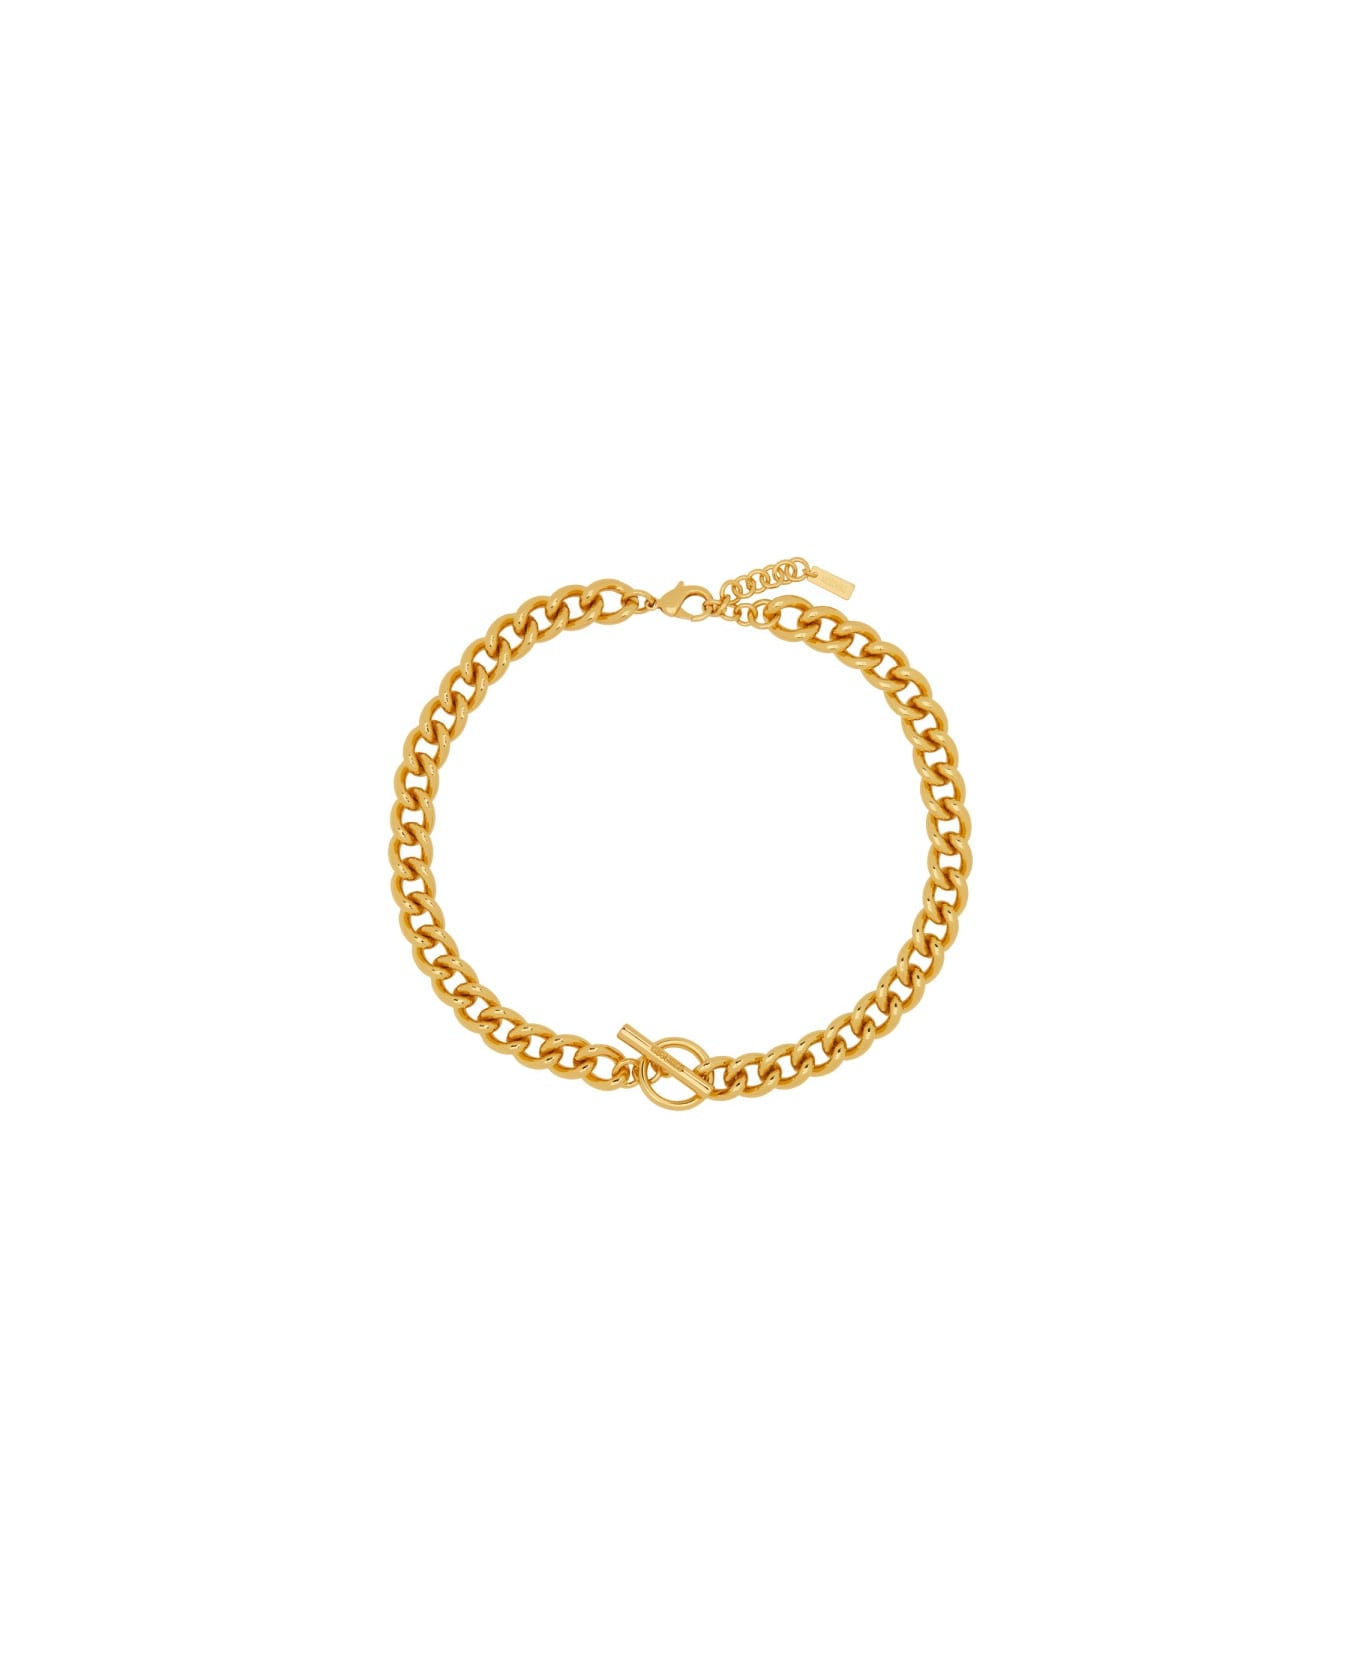 Moschino Logo Necklace - GOLD